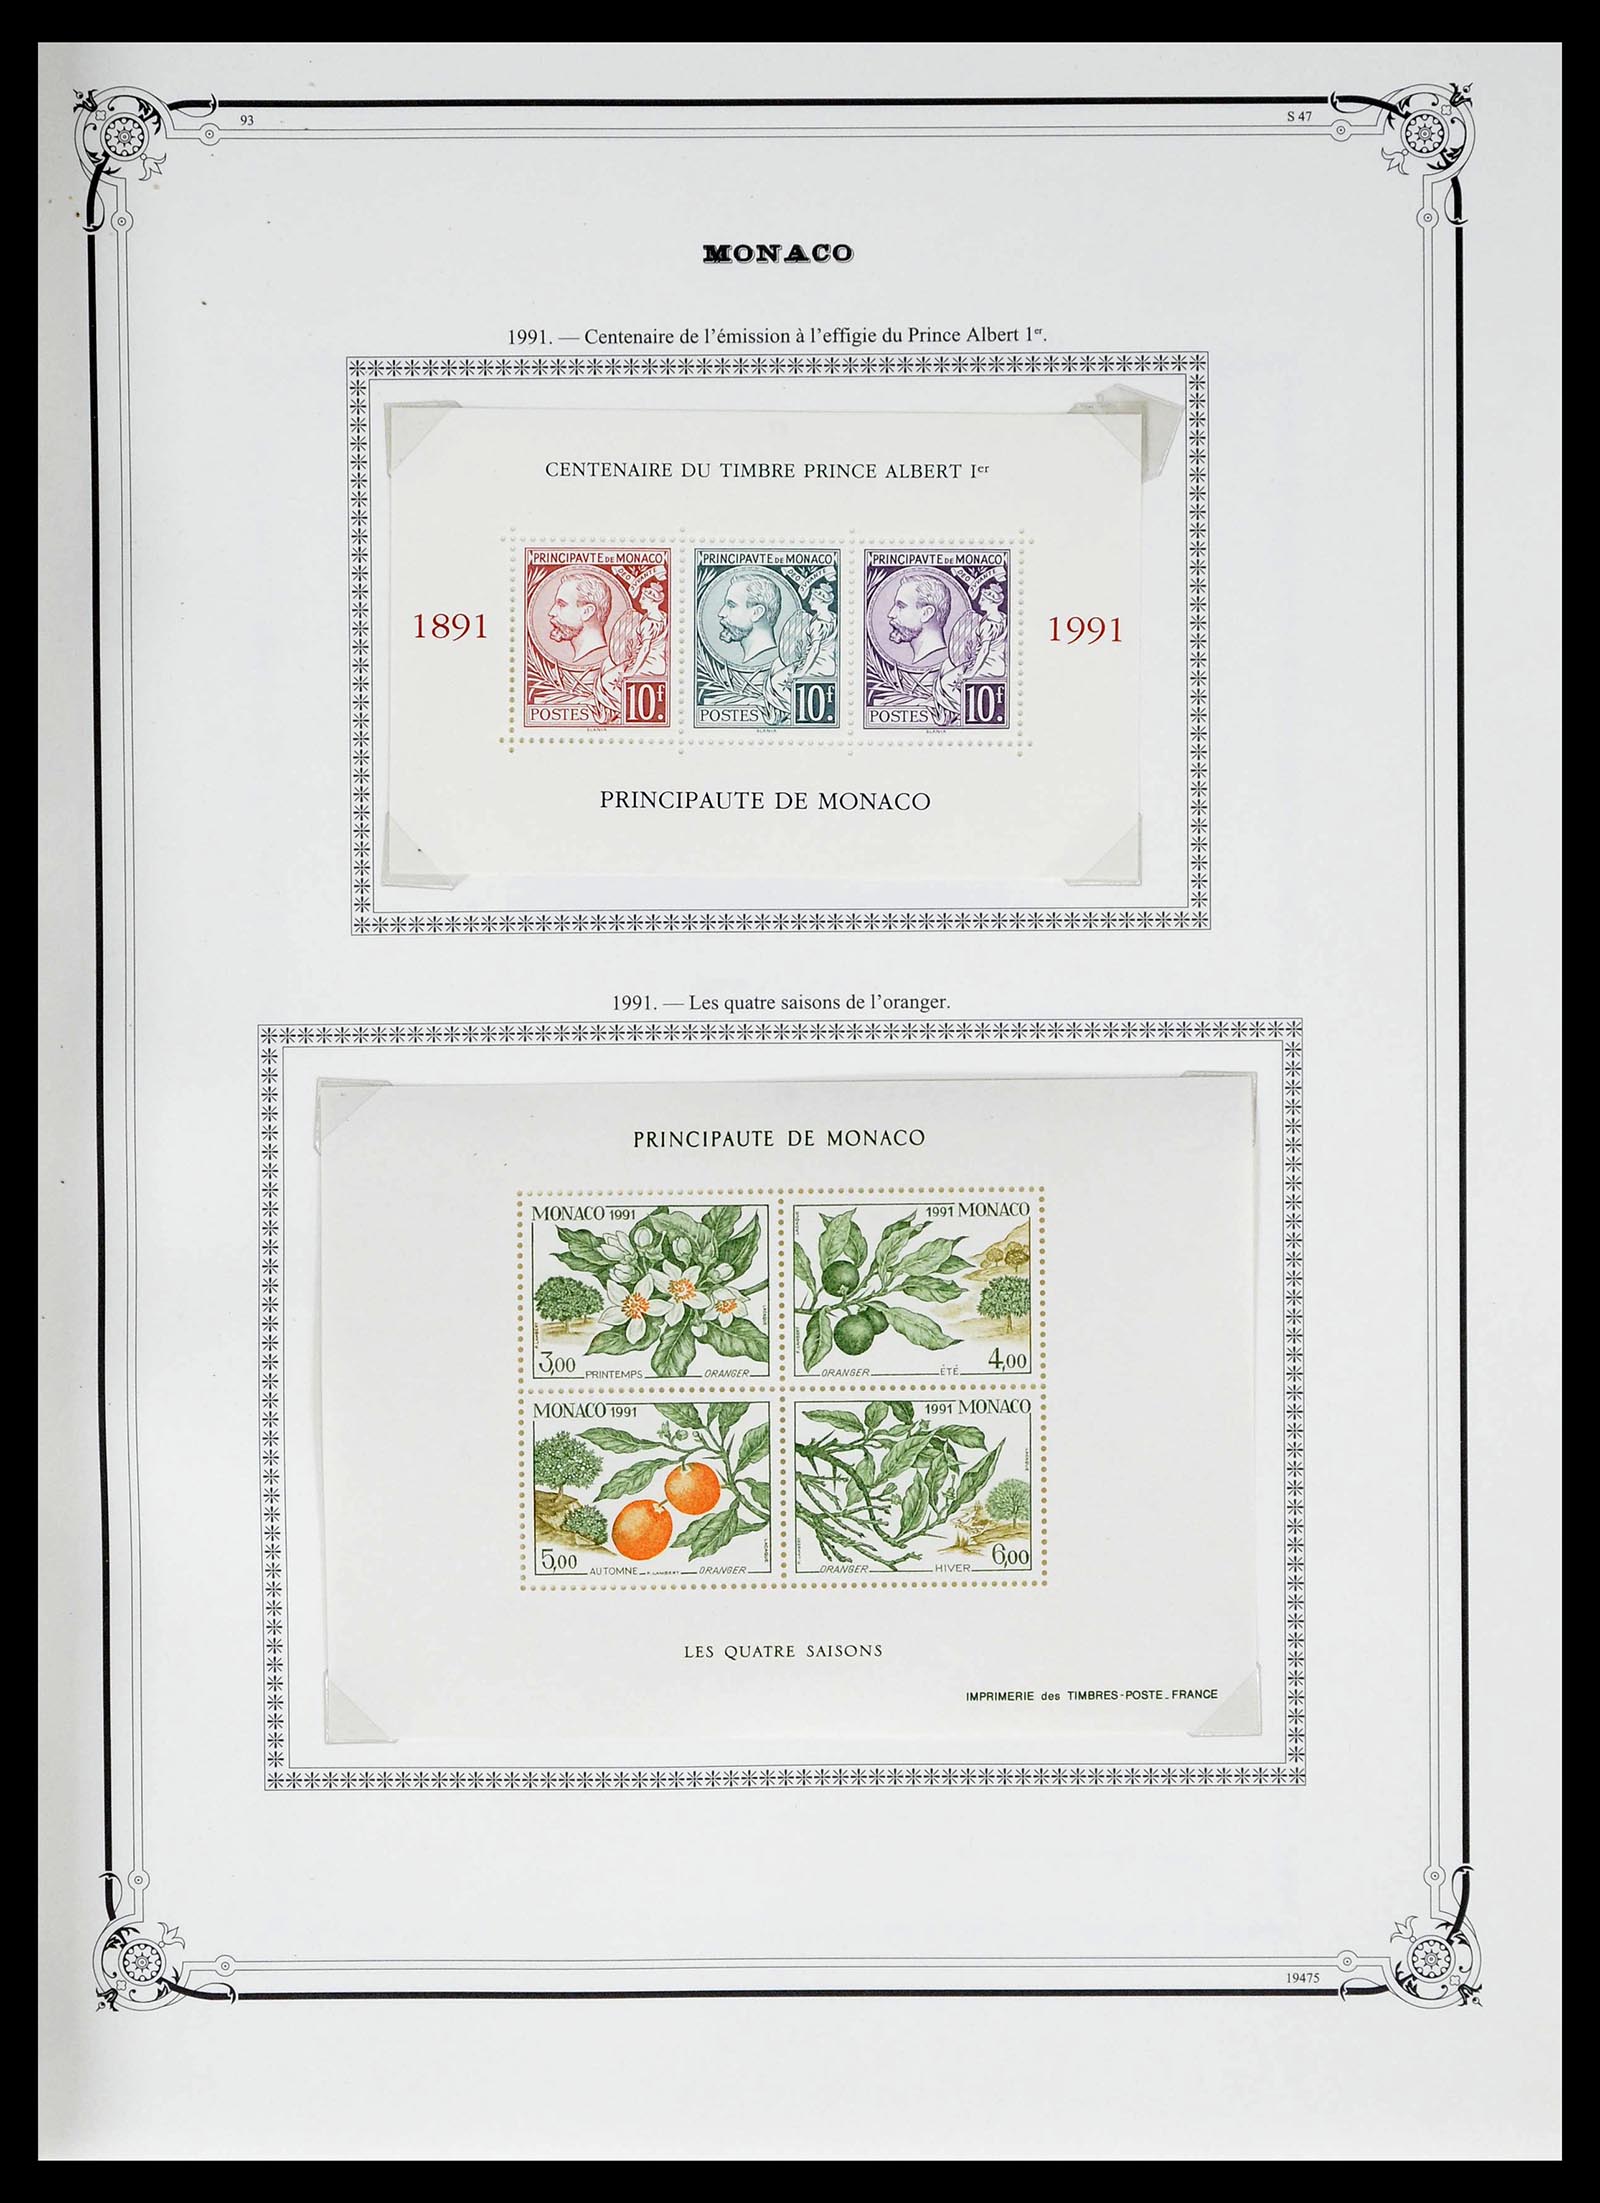 39133 0236 - Stamp collection 39133 Monaco 1885-1996.